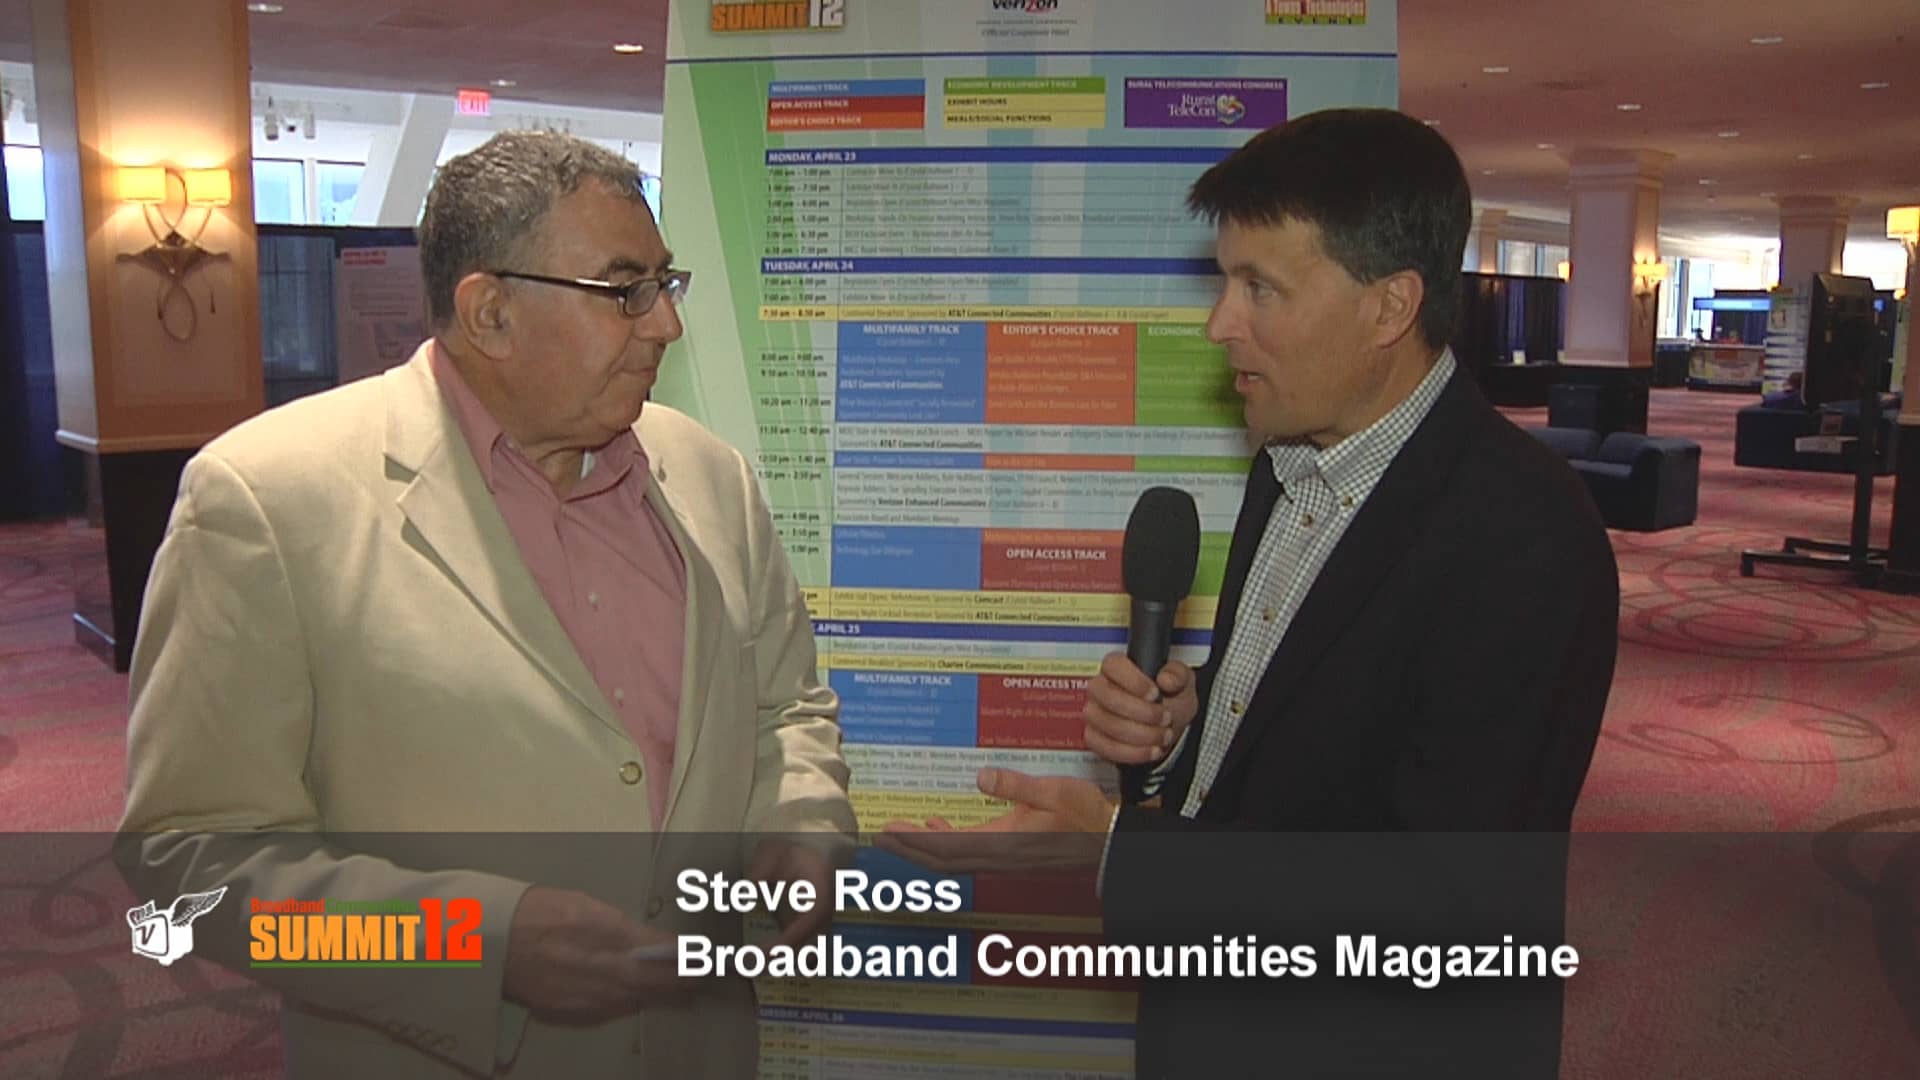 Steve Ross of Broadband Communities Magazine explains the program for the 2012 Broadband Communities Summit.